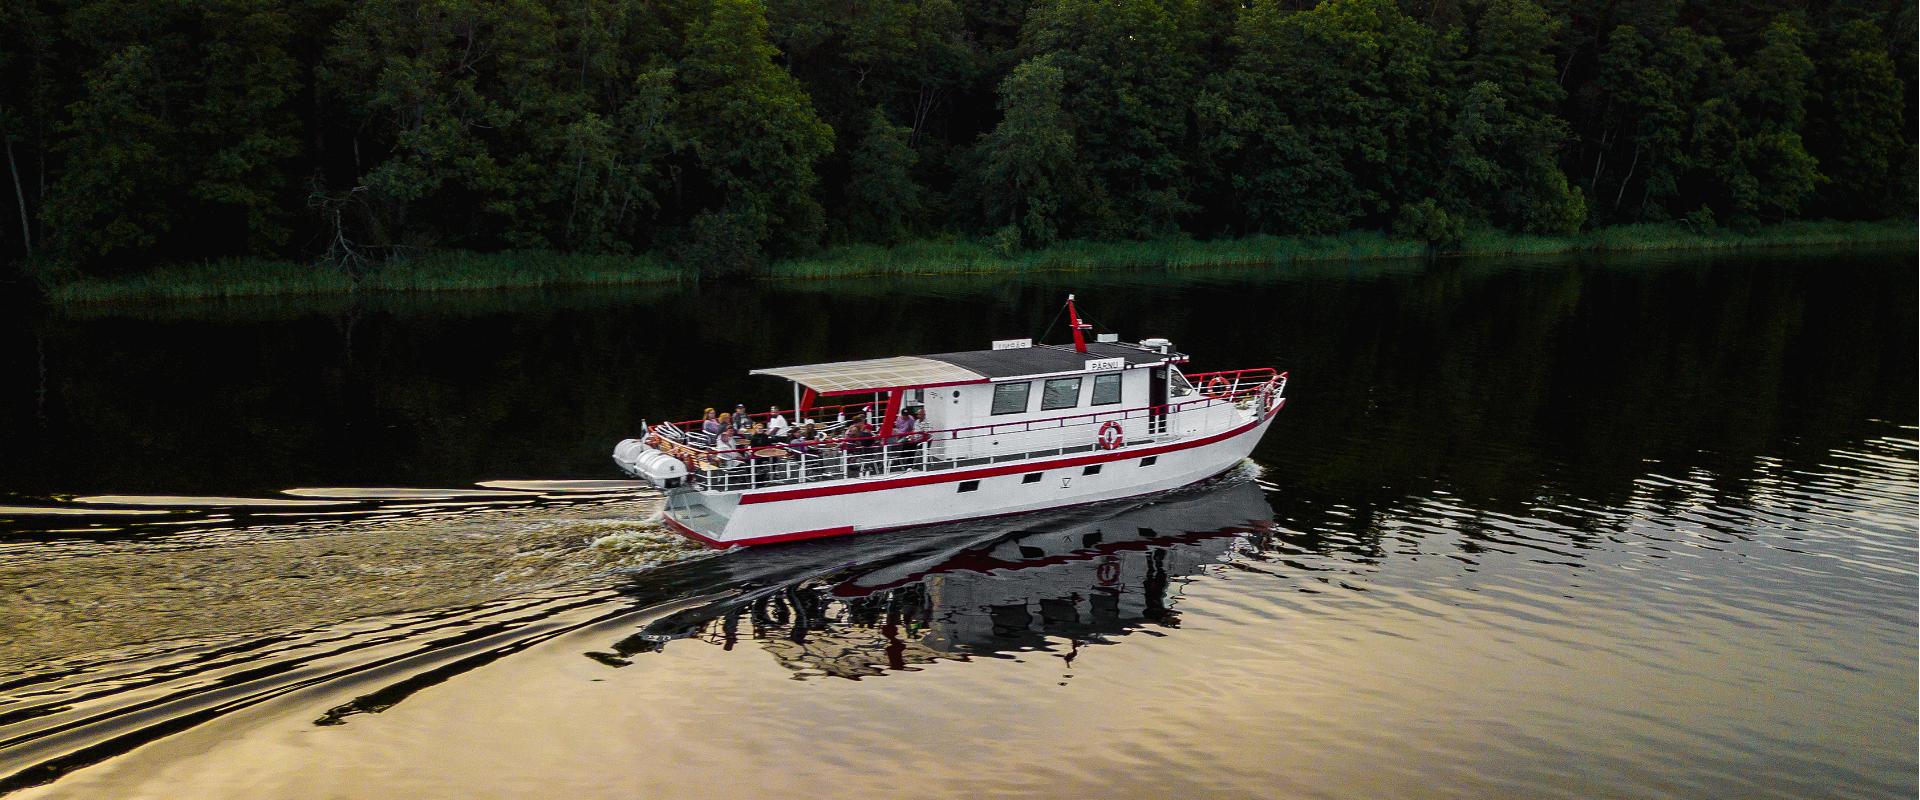 Pärnu Cruises boat trips on the Pärnu River and Pärnu Bay